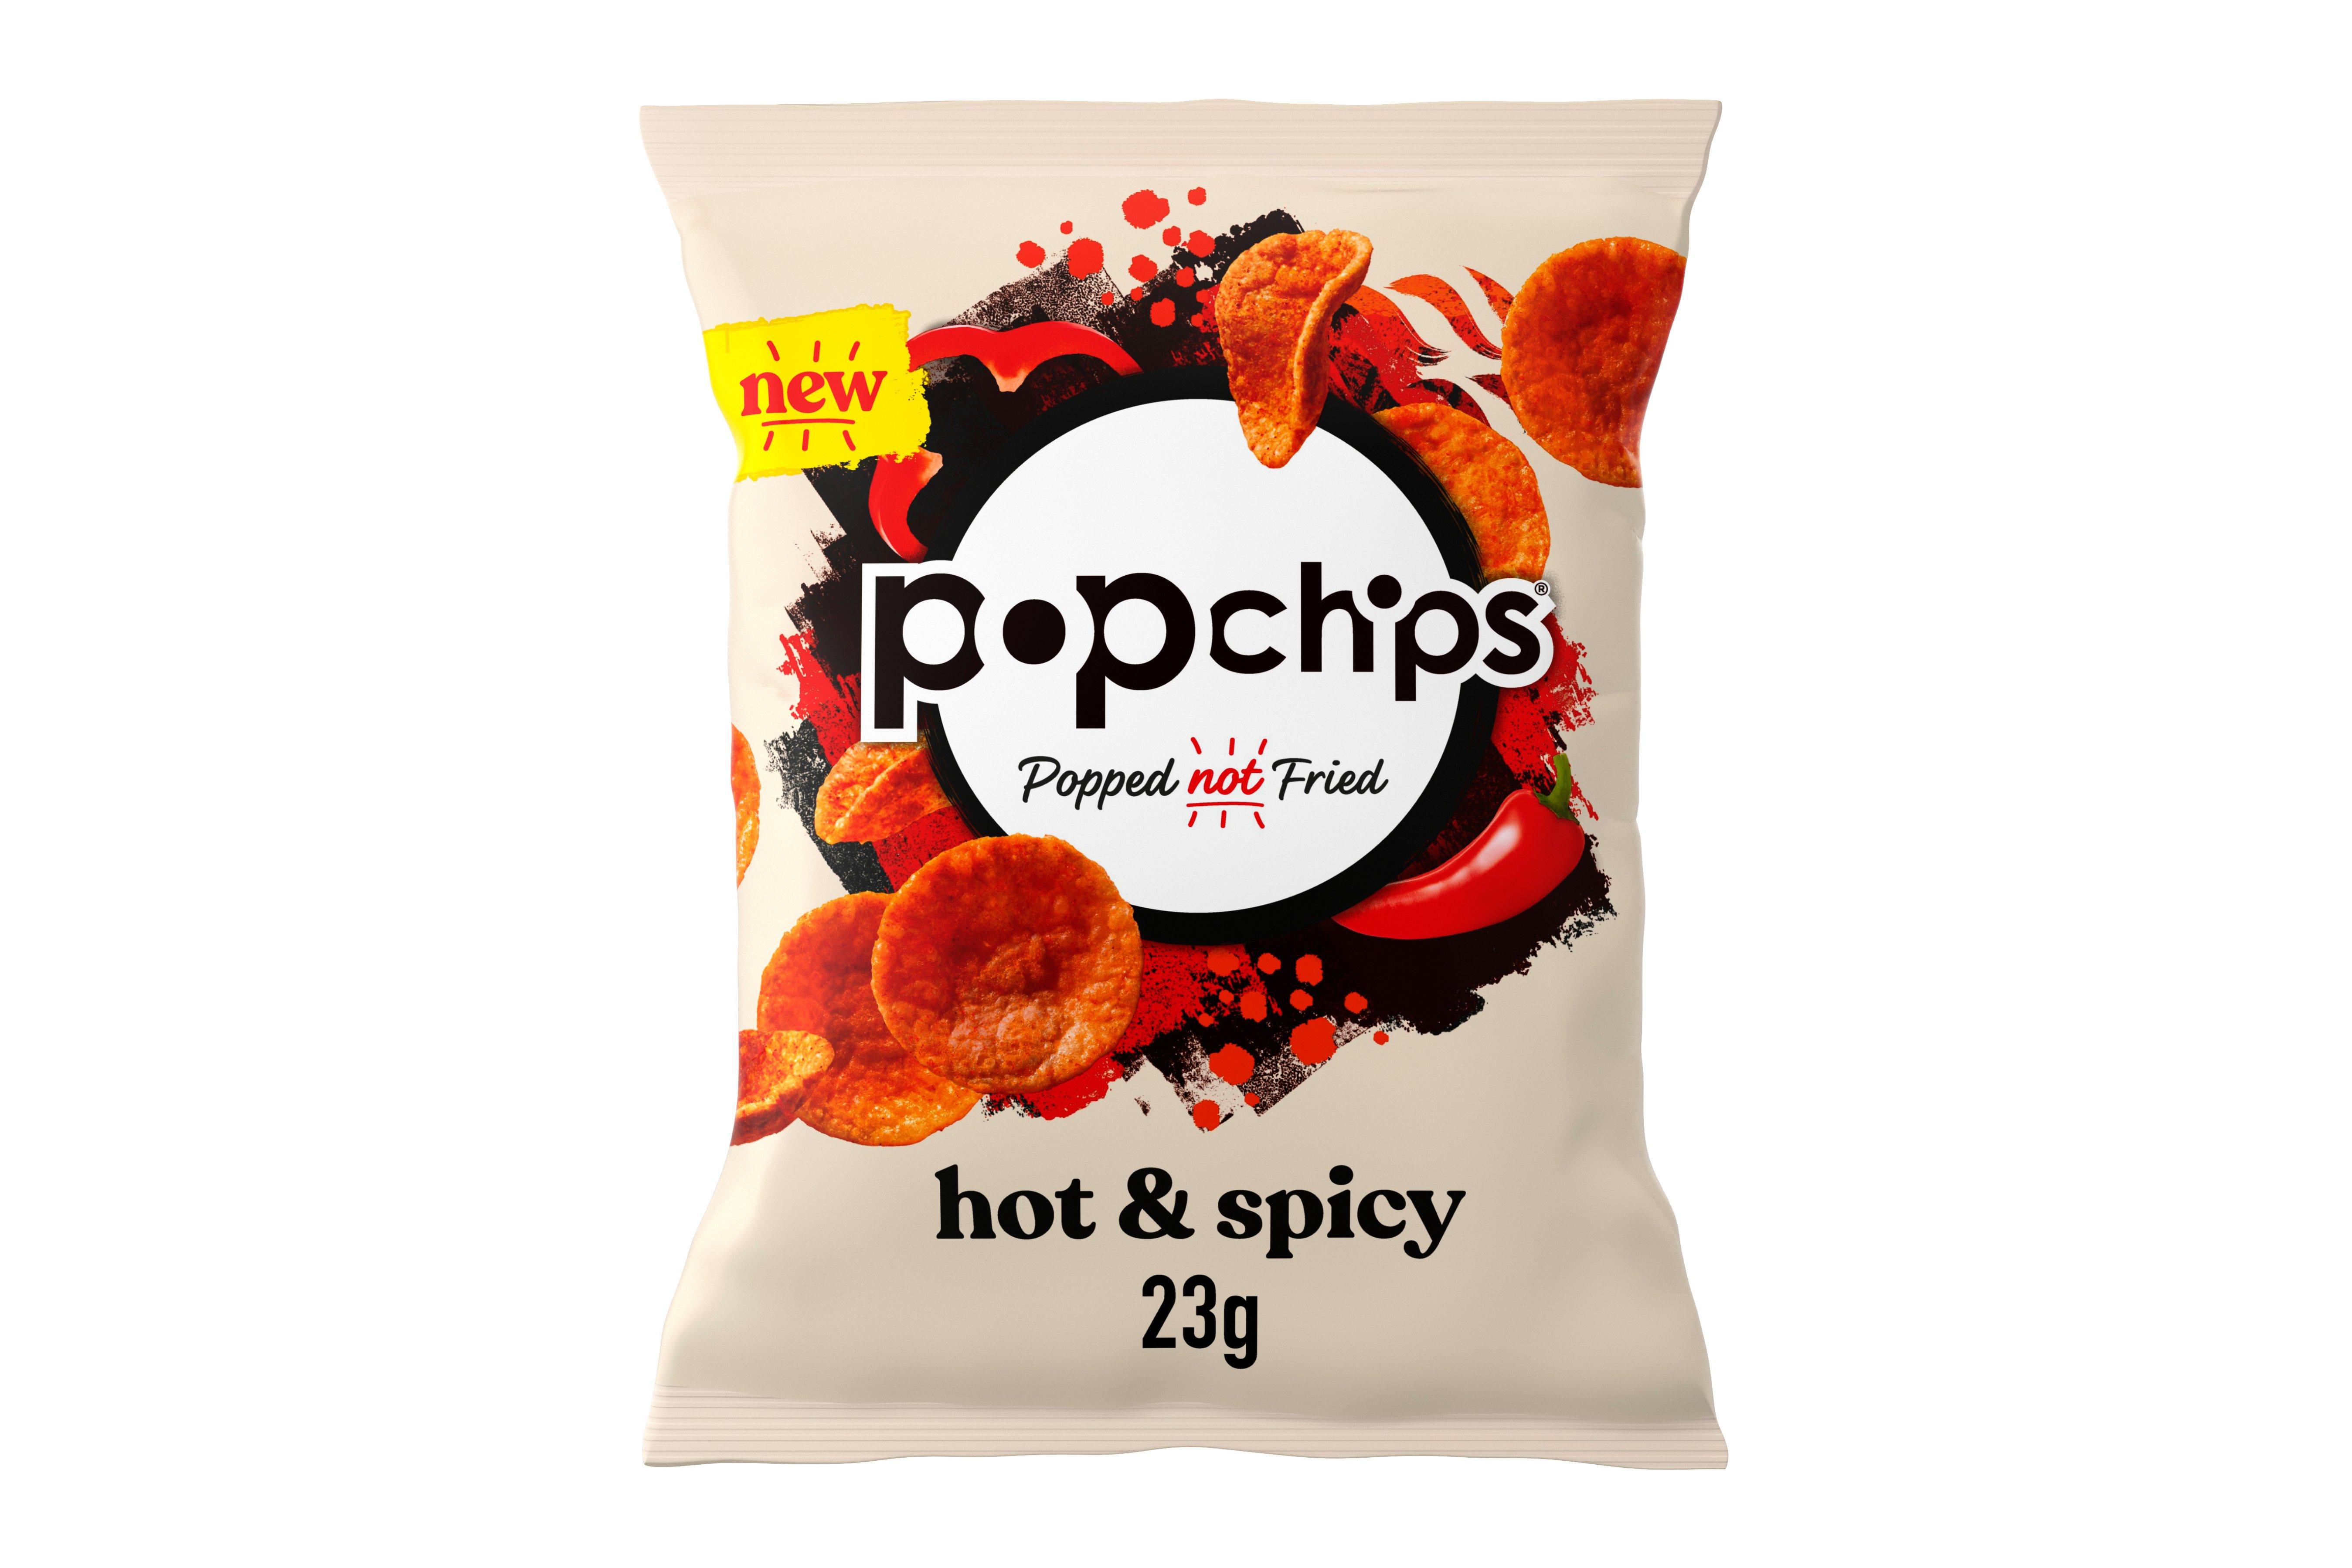 Popchips Hot & Spicy Crisps